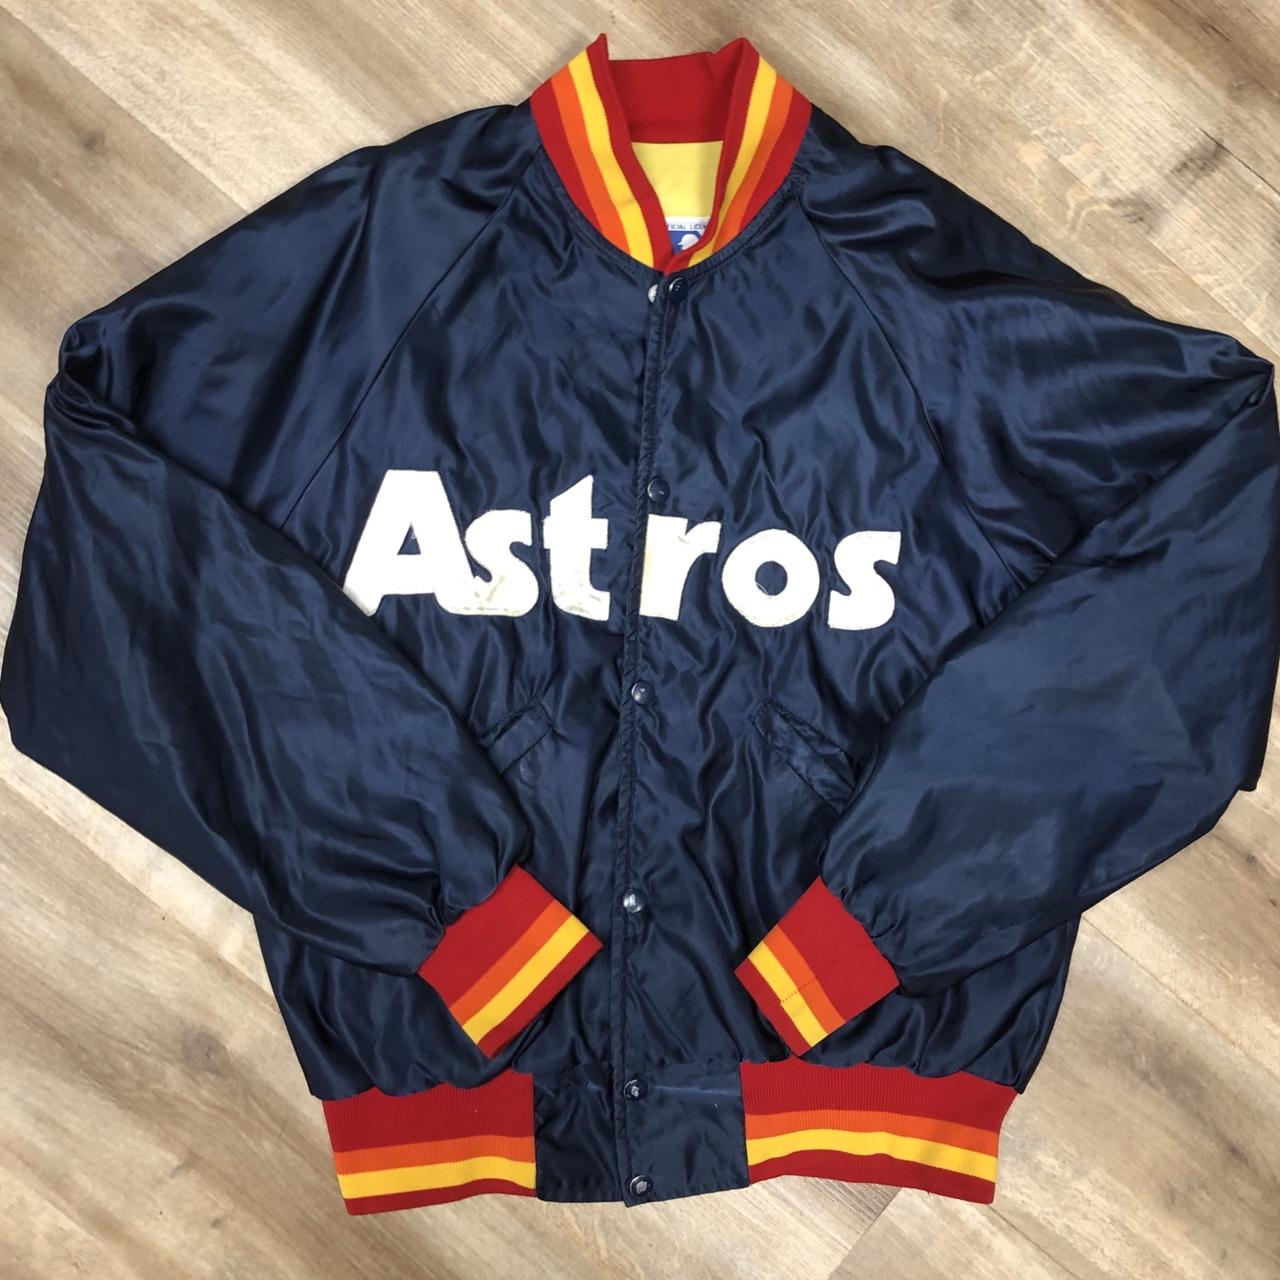 Vintage 80s Houston Astros Starter Jacket 